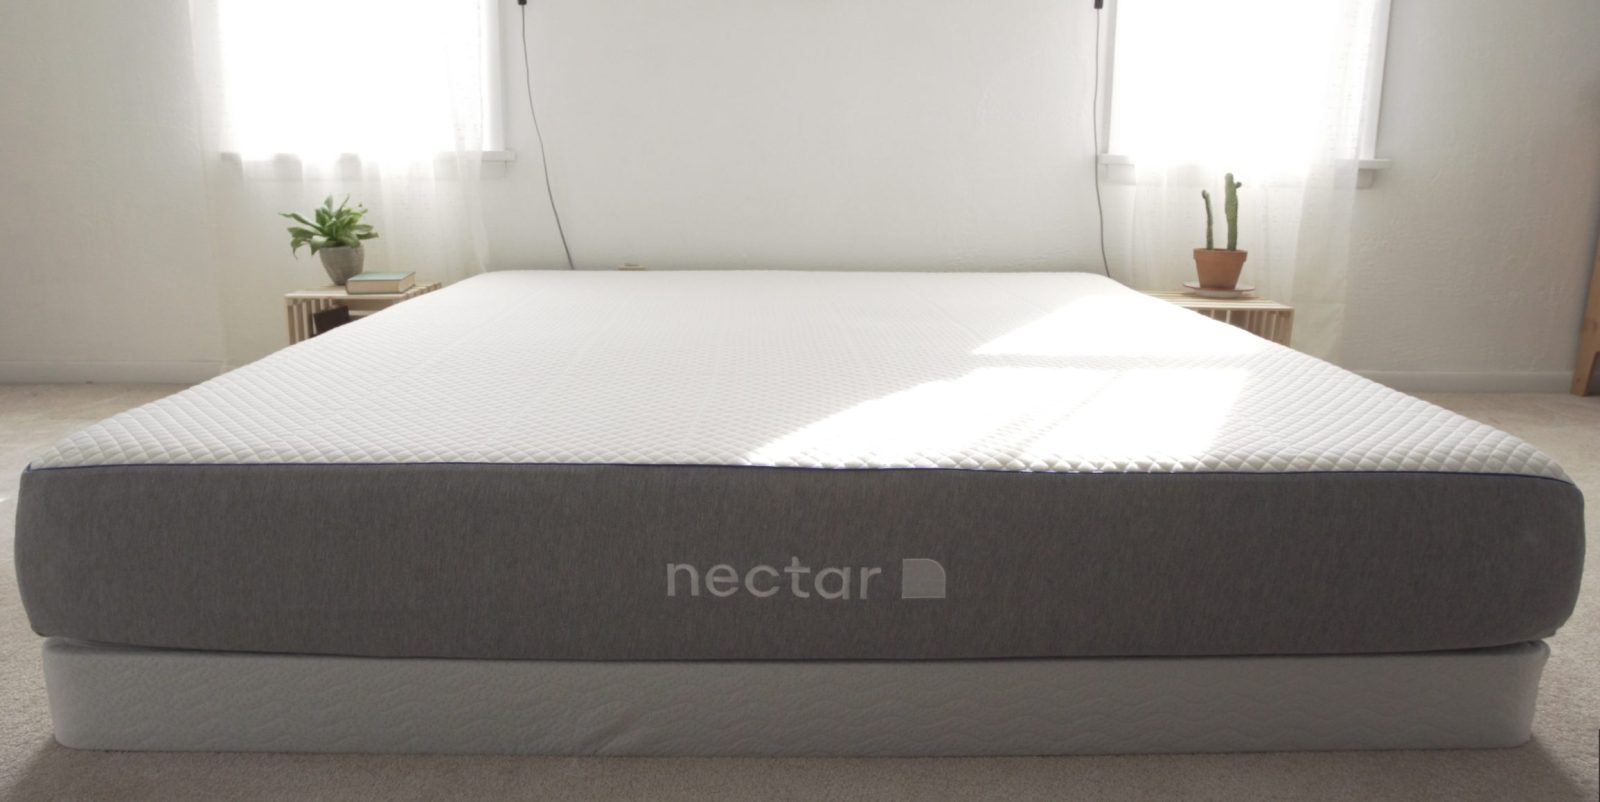 nectar queen mattress with box spring